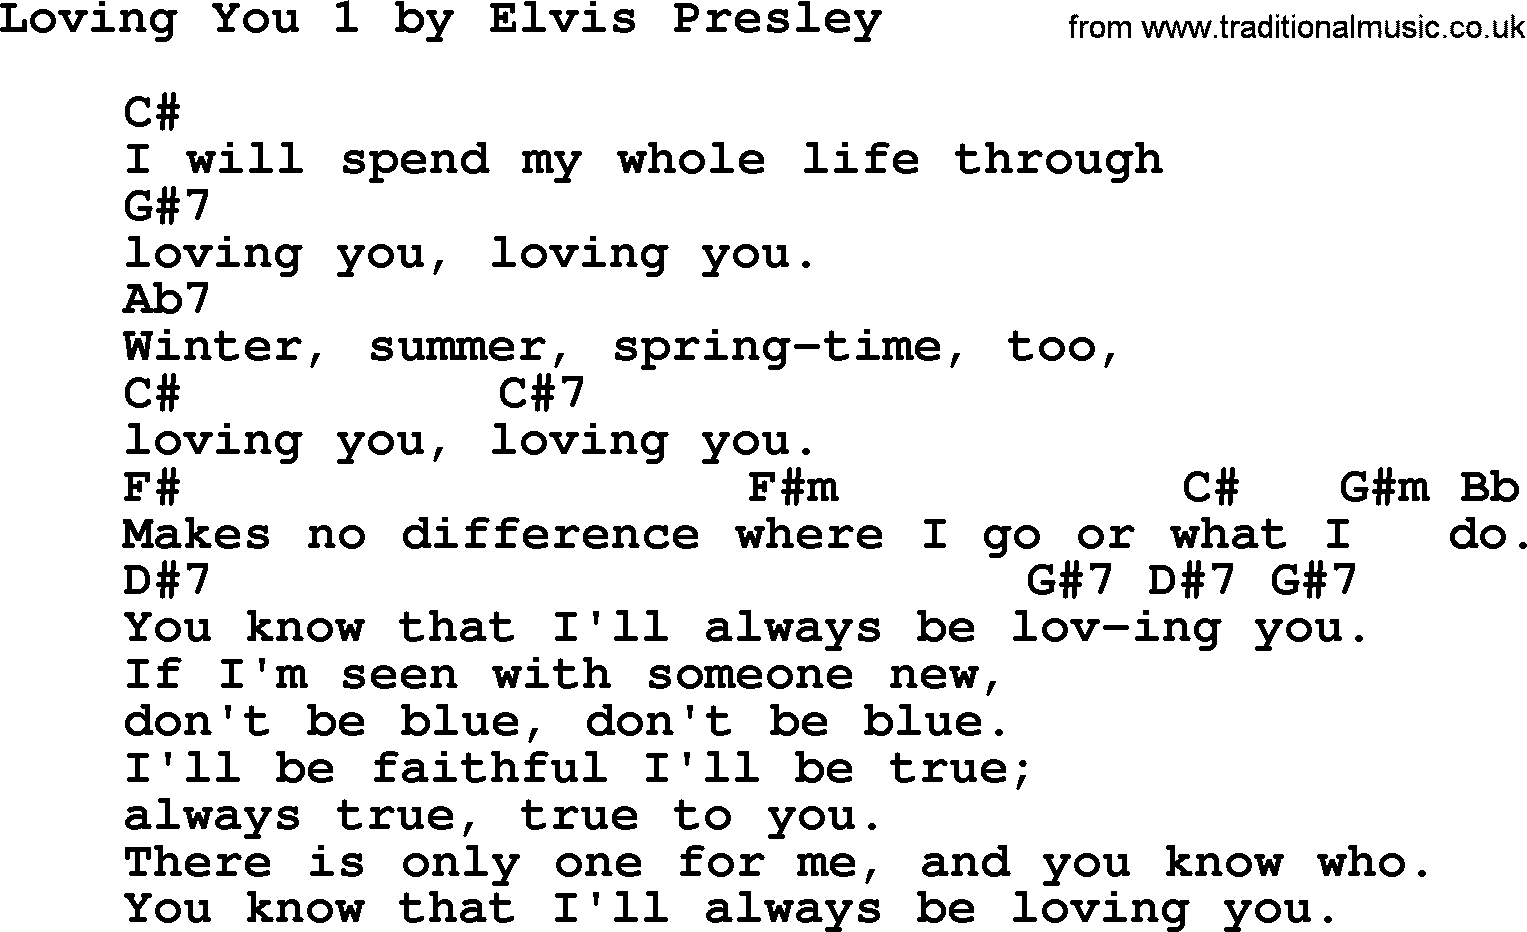 Elvis Presley song: Loving You 1, lyrics and chords